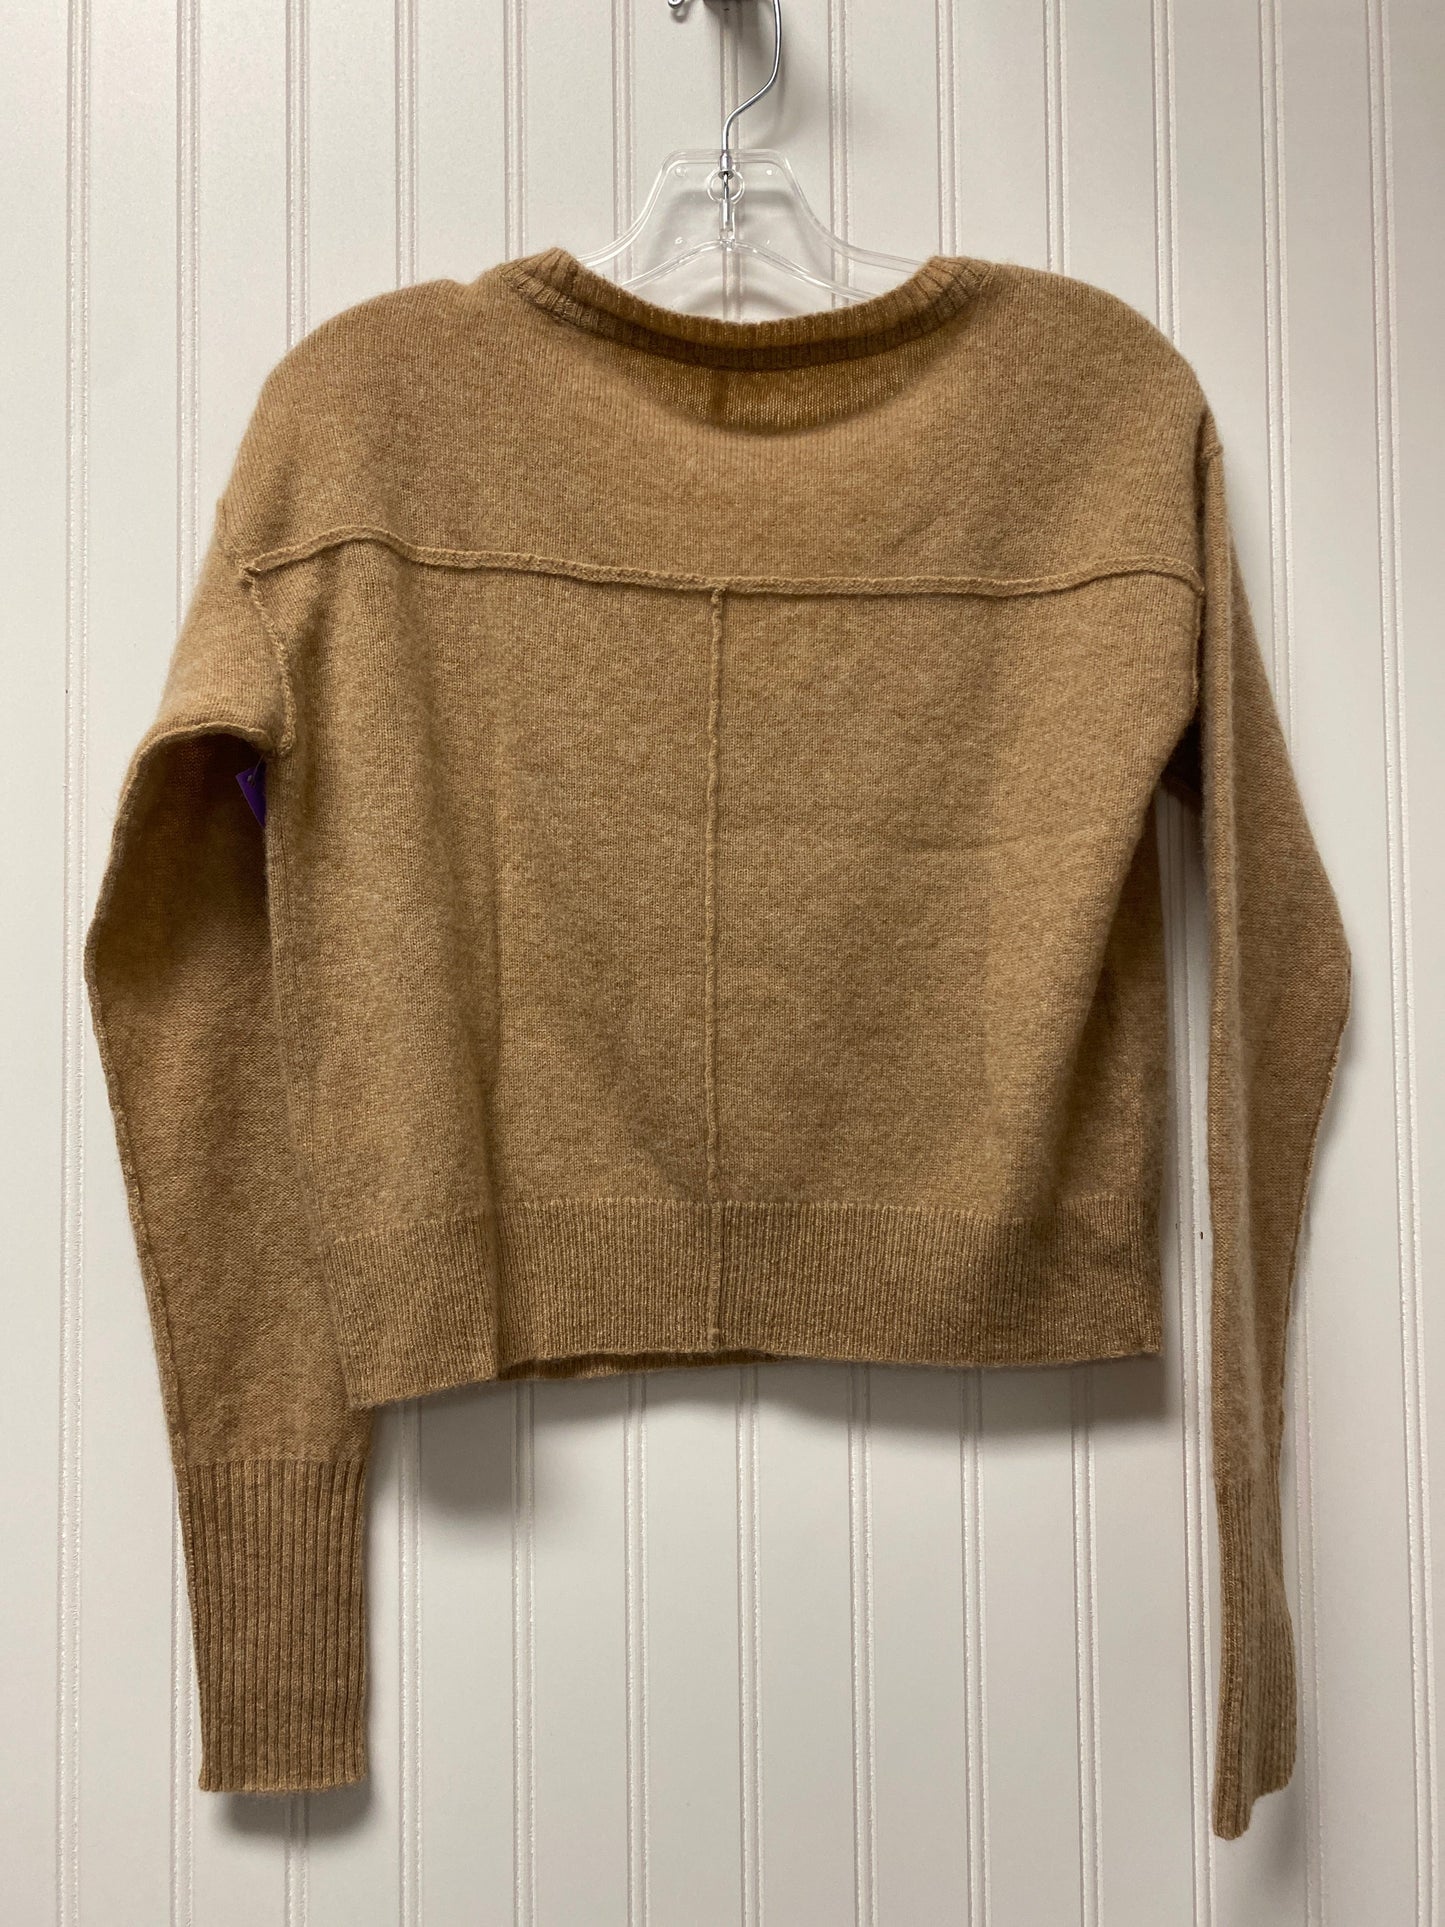 Tan Sweater Cashmere Free People, Size Xs